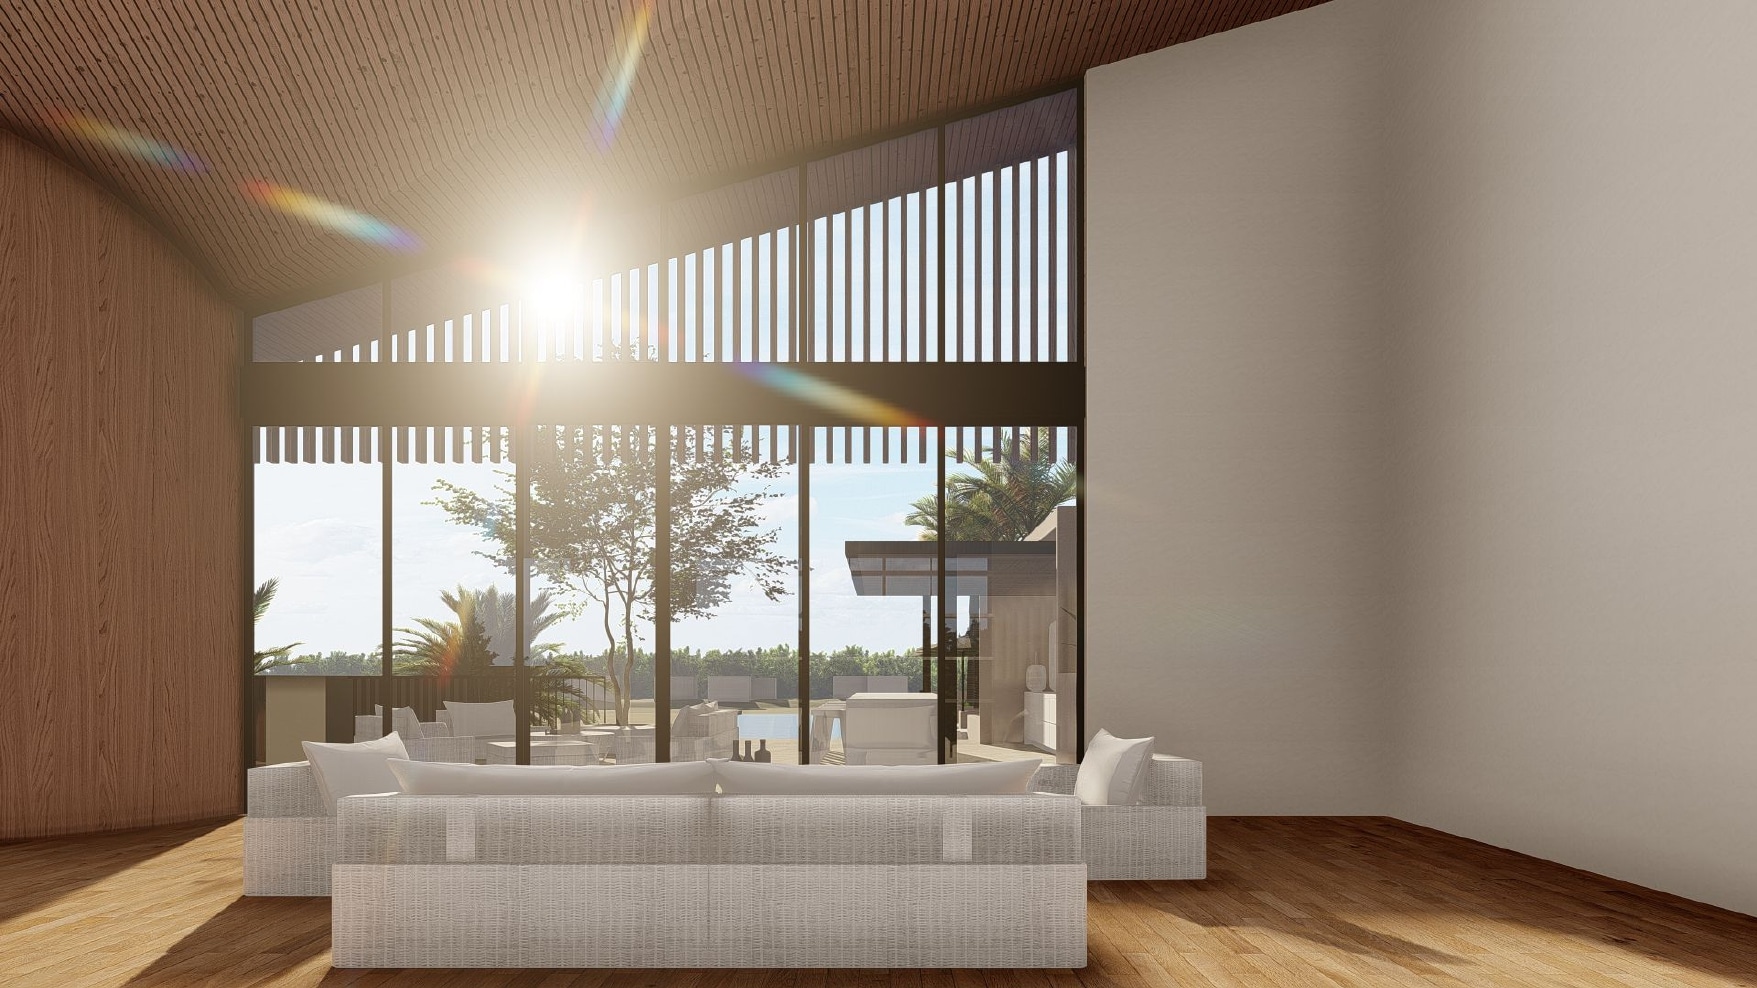 Design Assembly - Berawa 15 Villa - Bali Architect - Interior Design - Bali Villa - Living Room - Wooden Facade - Wall Facade